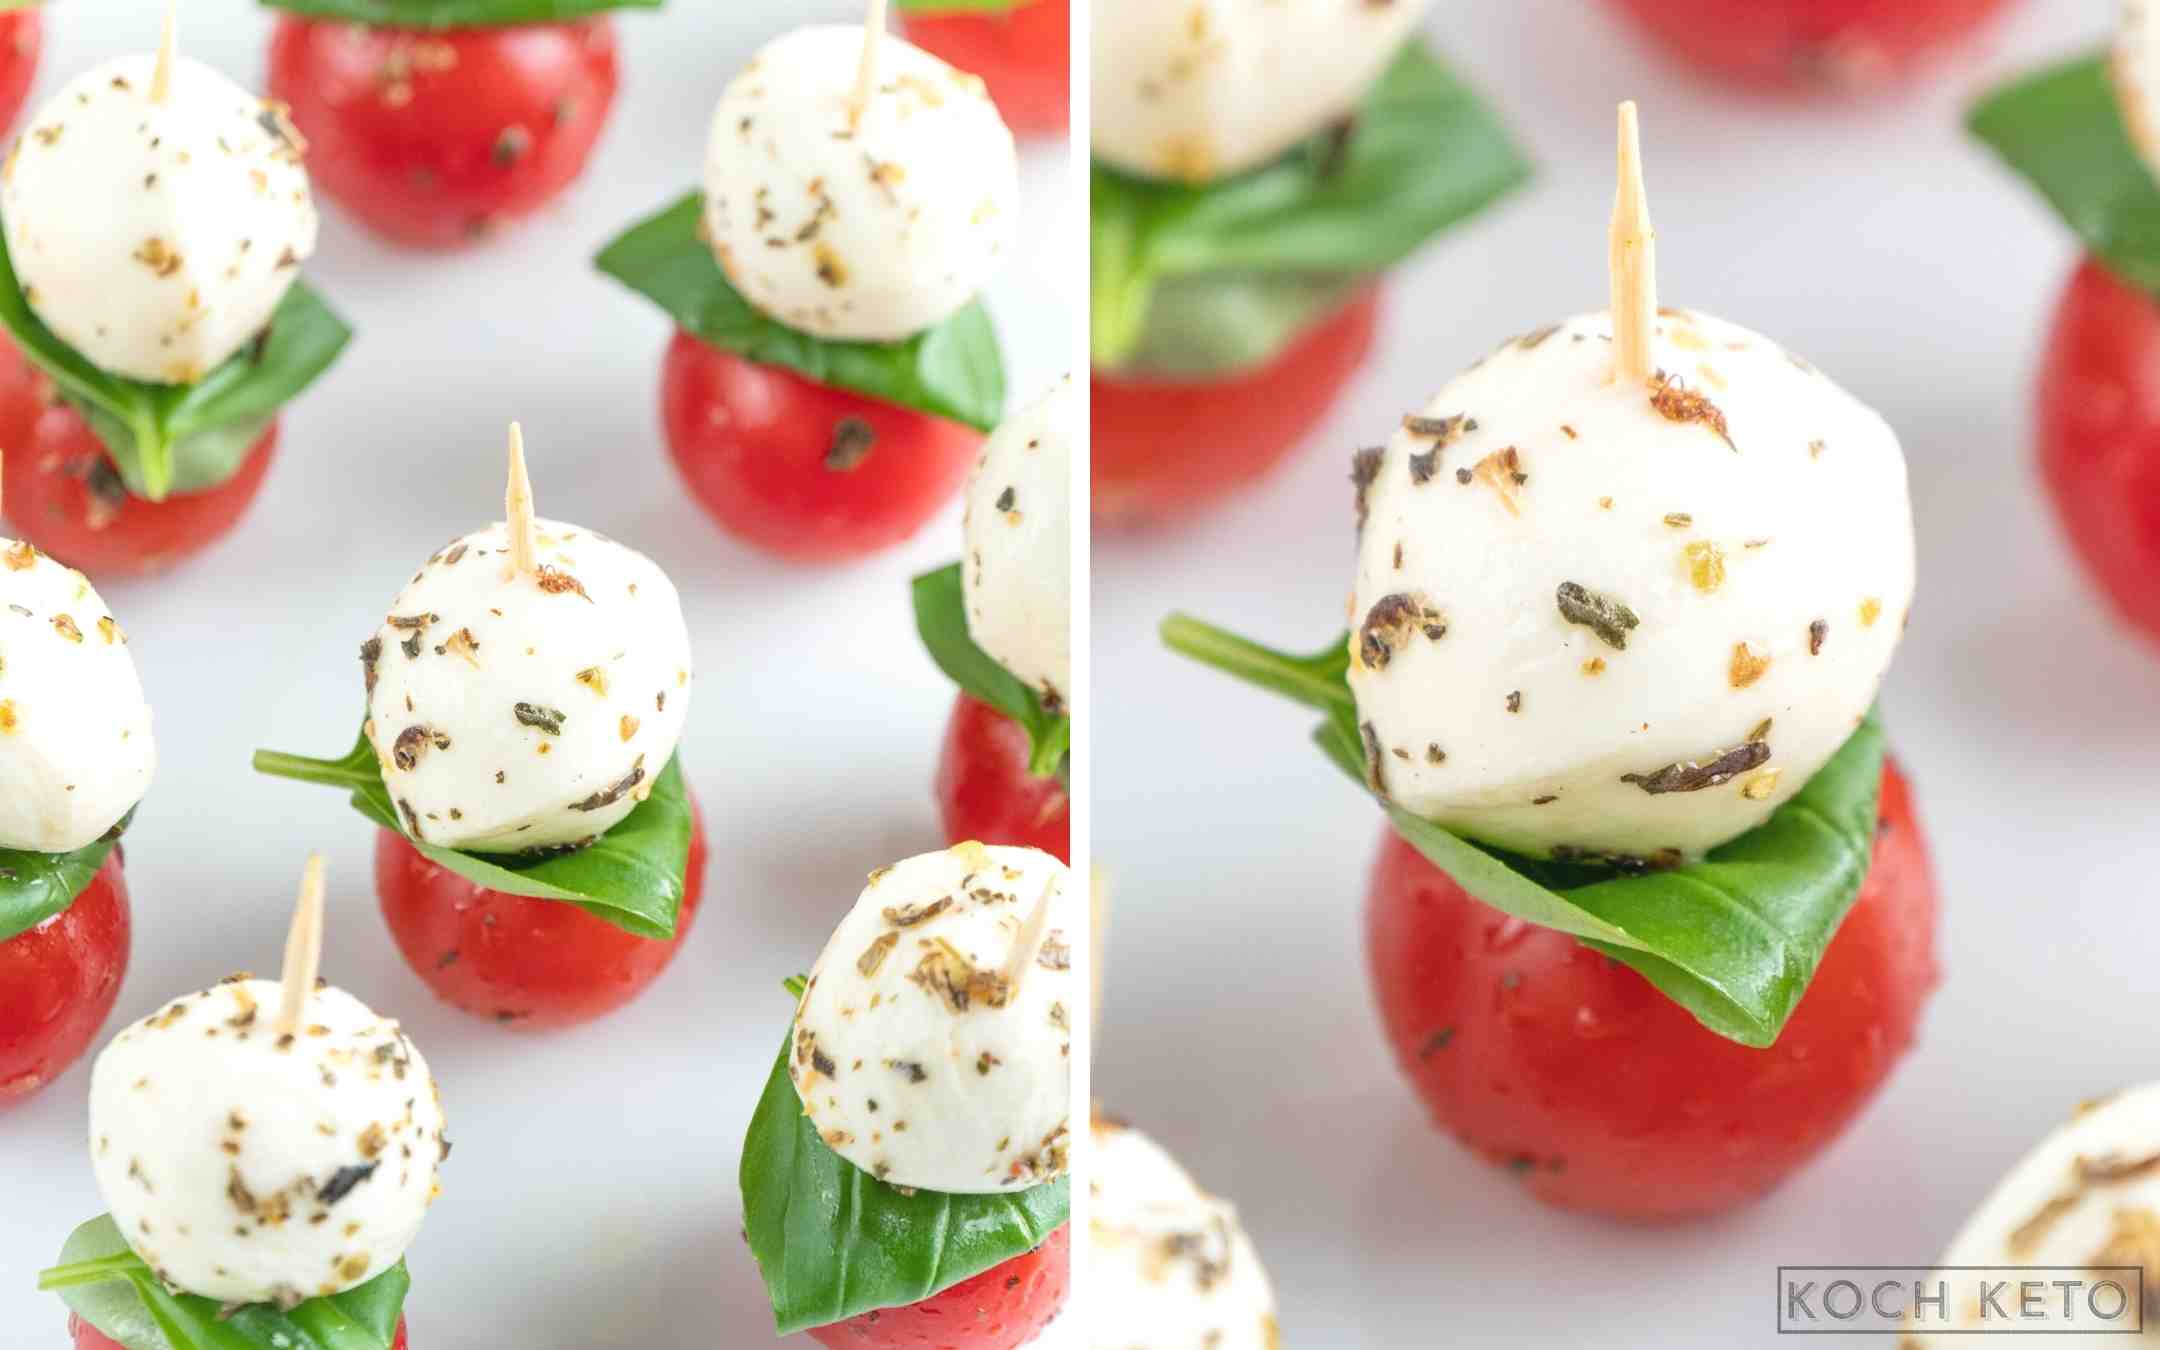 Schnelle Low Carb Tomaten-Mozzarella-Spieße als kalorienarmer Snack ohne Kohlenhydrate Desktop Image Collage